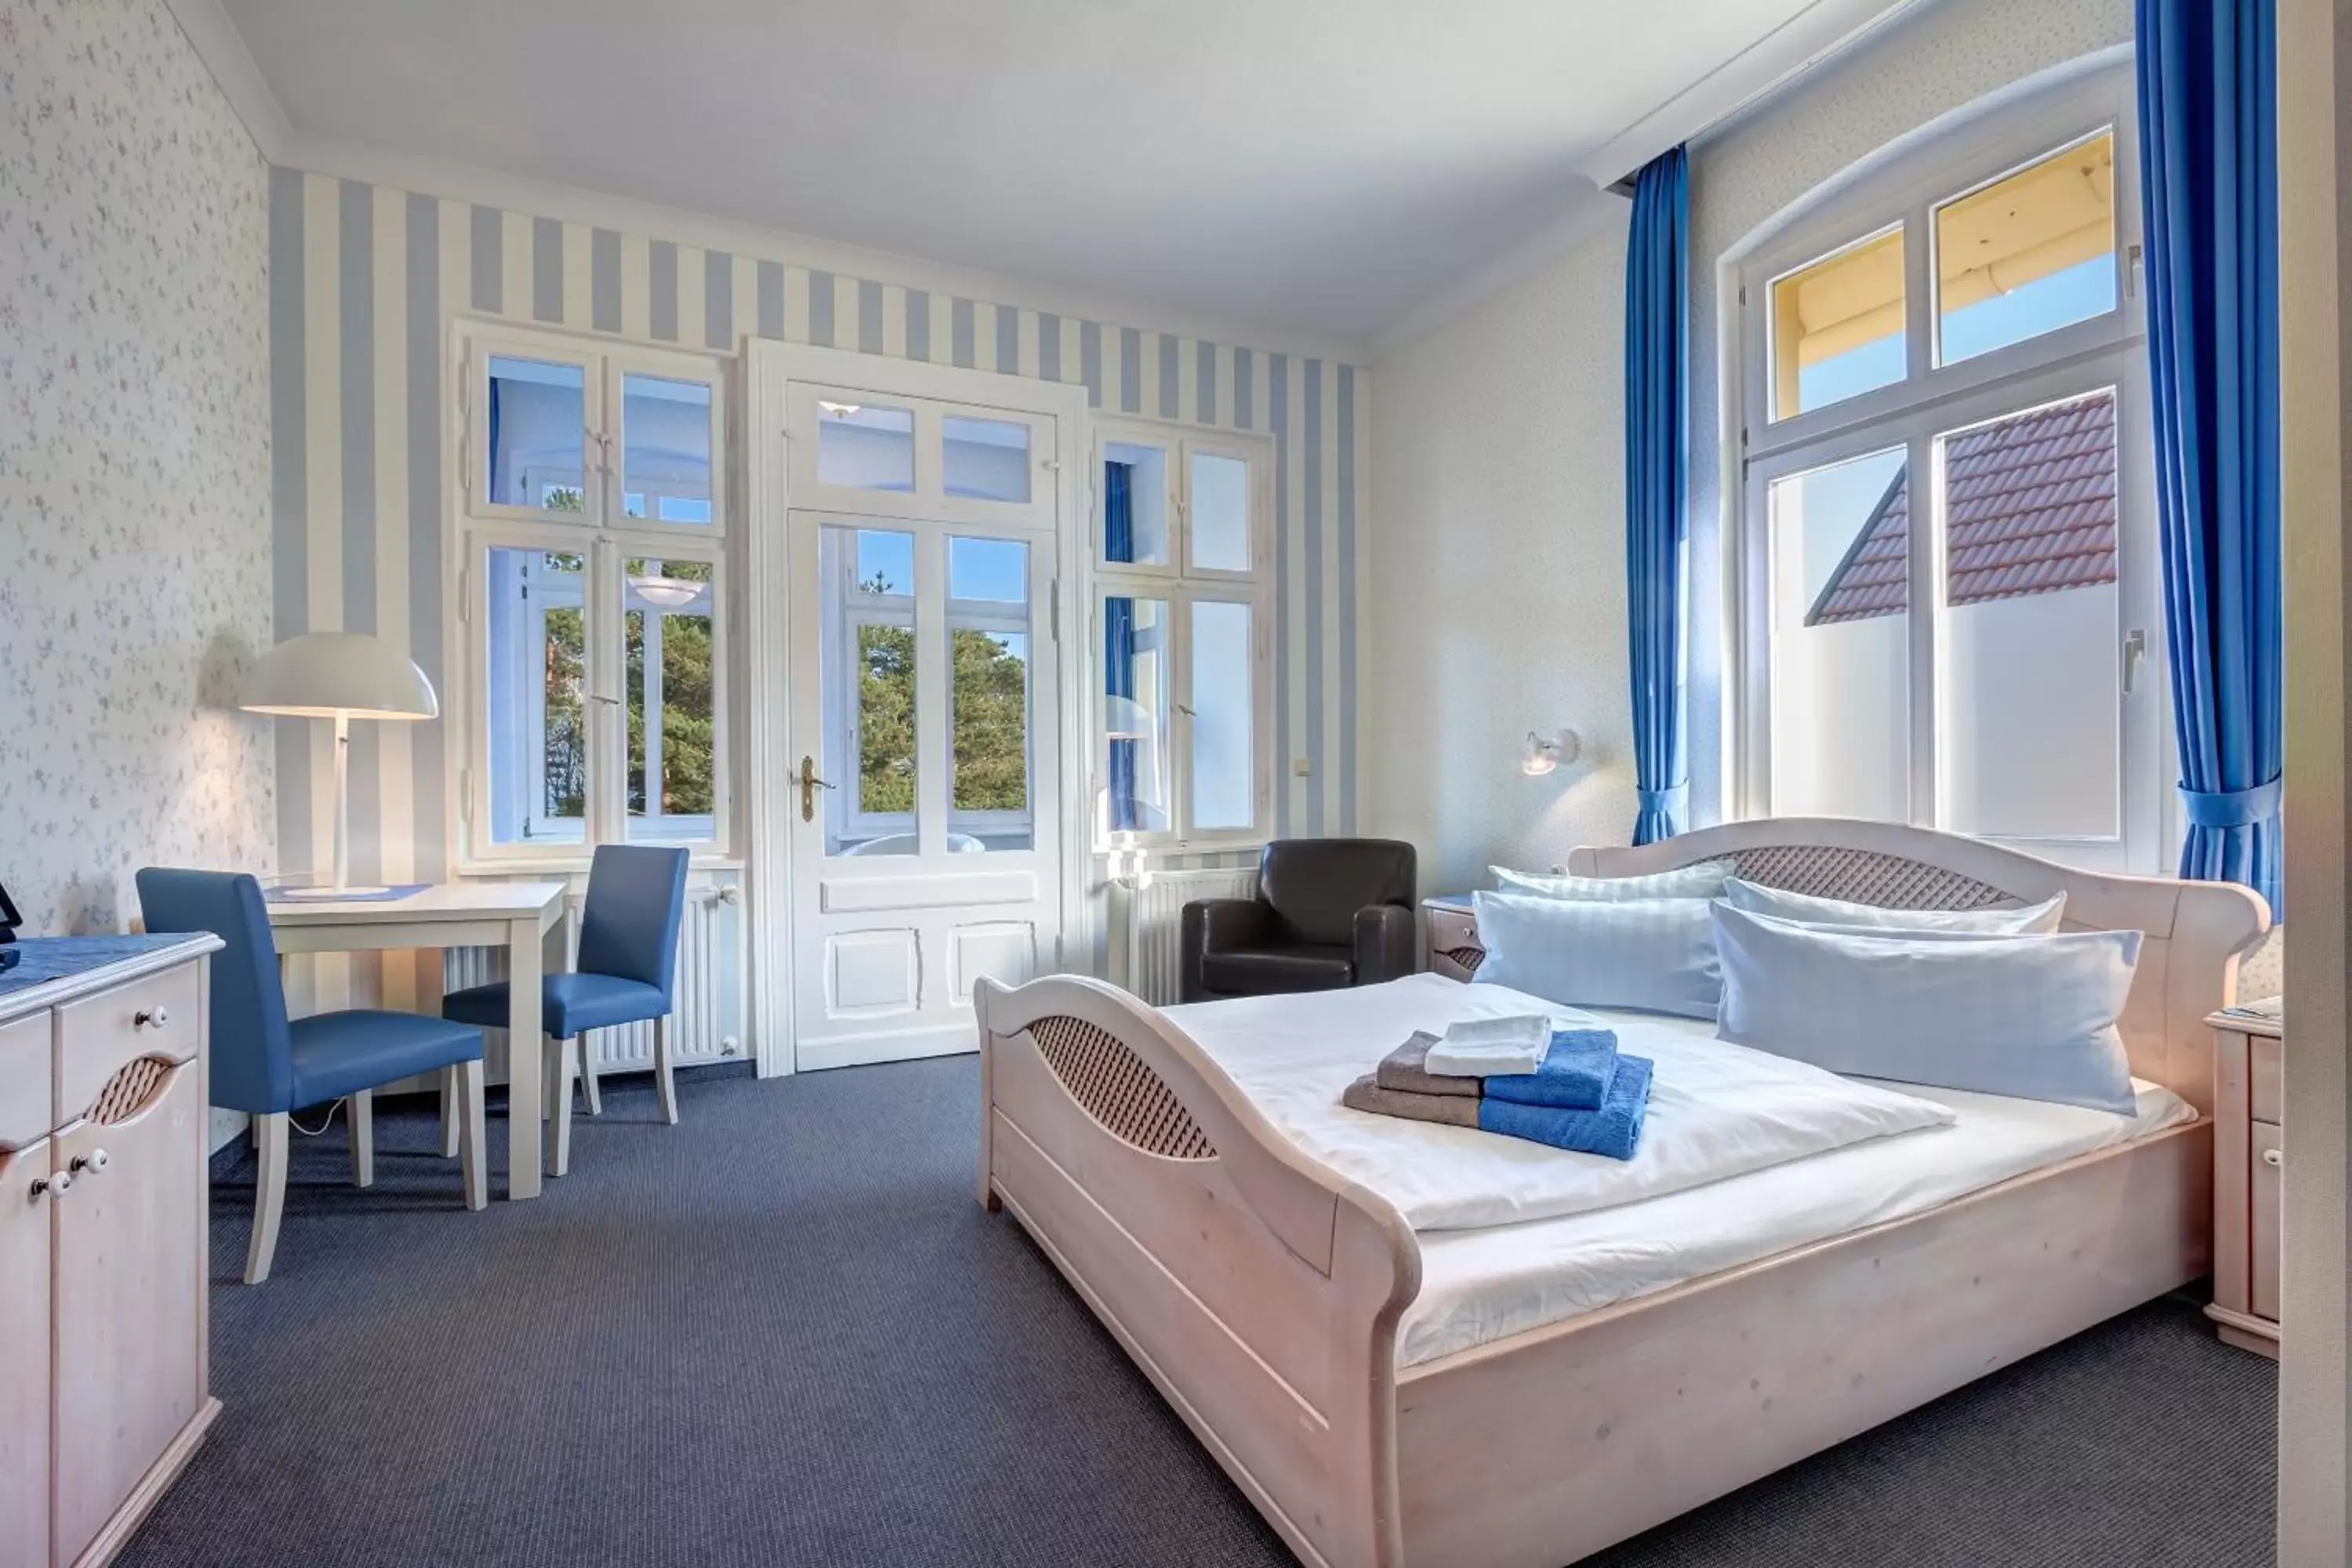 Photo of the whole room in Hotel Villa Seeschlößchen